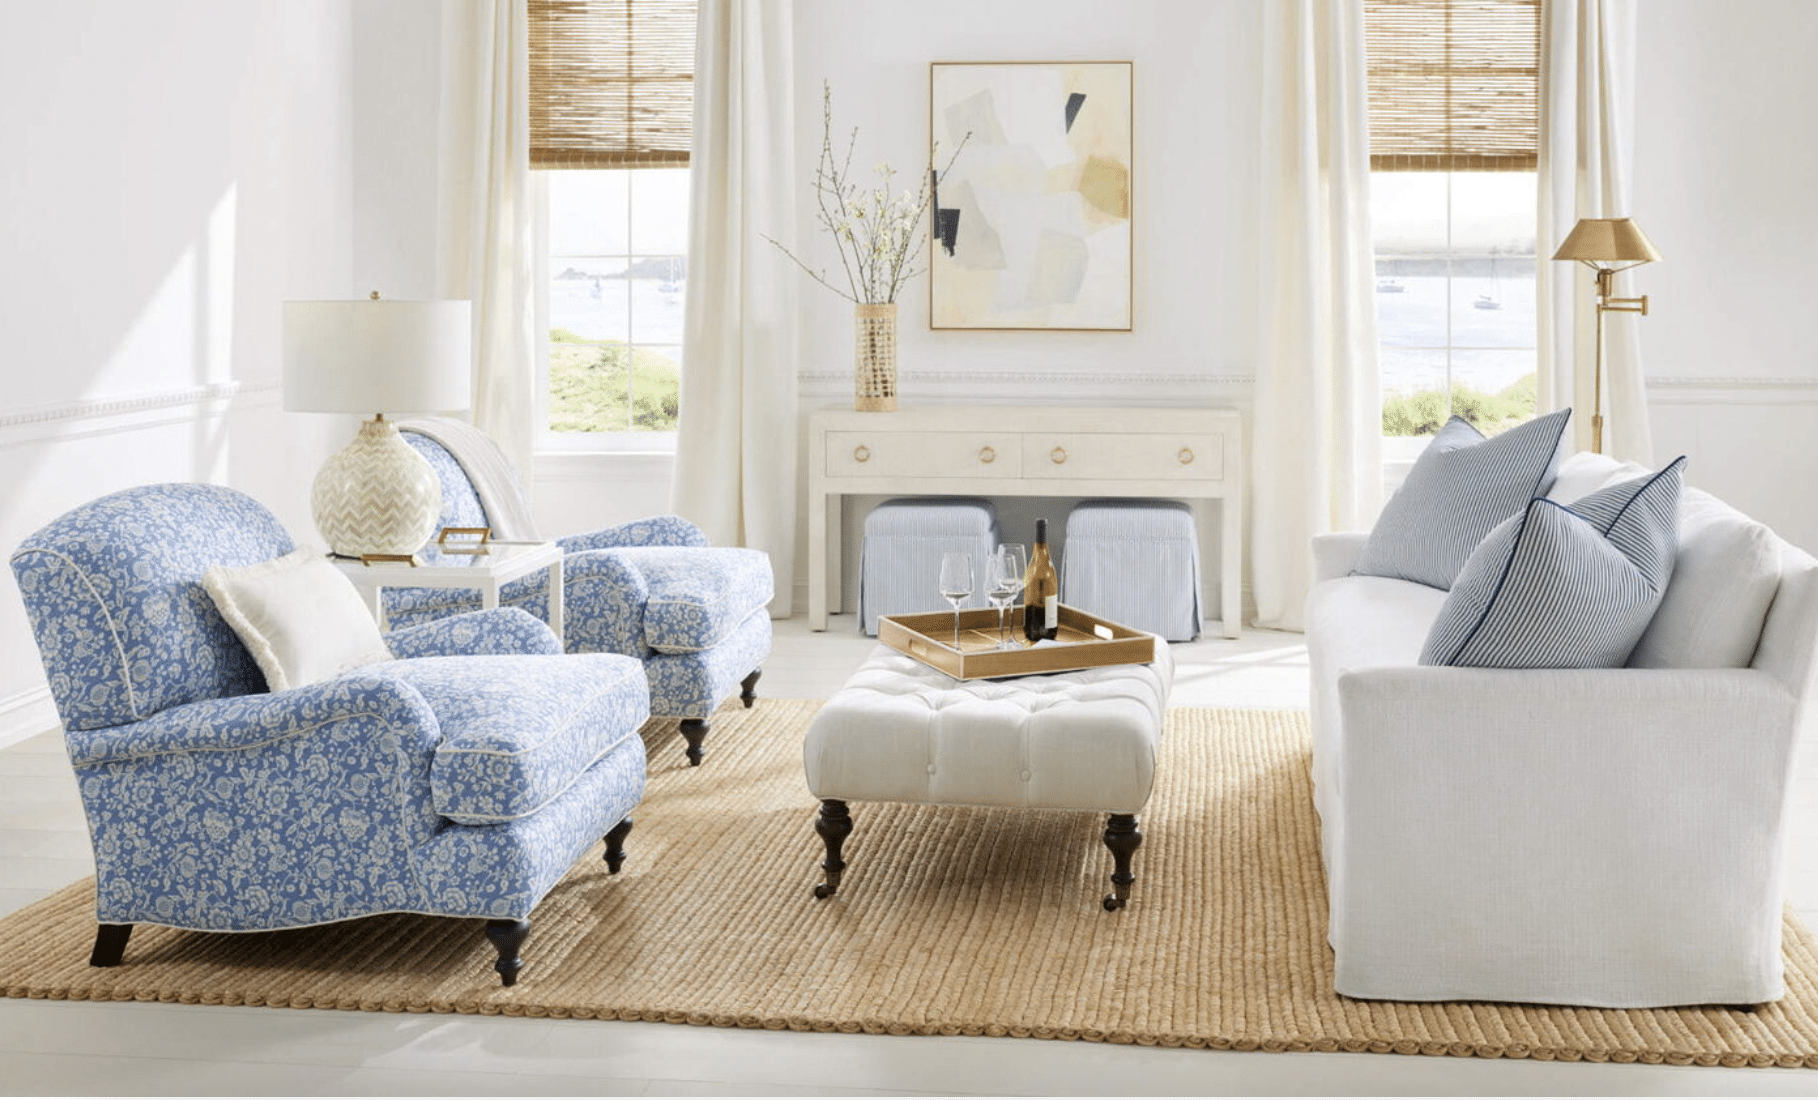 Serena & Lily blue and white living room - living room designe - living room decor - showhouse - remodeled living room